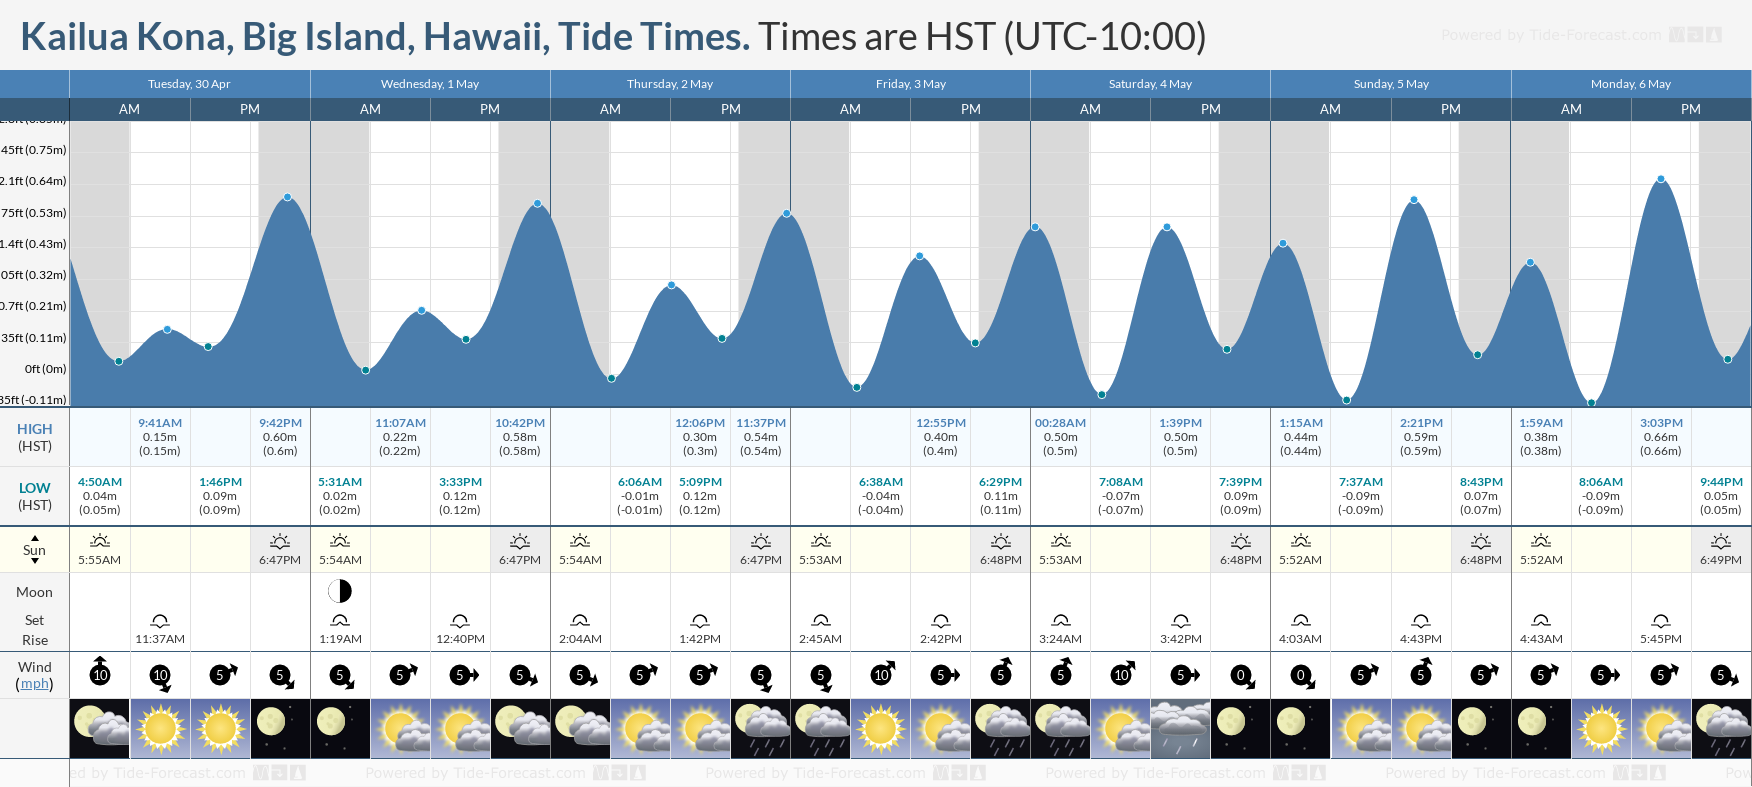 Kailua Kona, Big Island, Hawaii Tide Chart including high and low tide tide times for the next 7 days